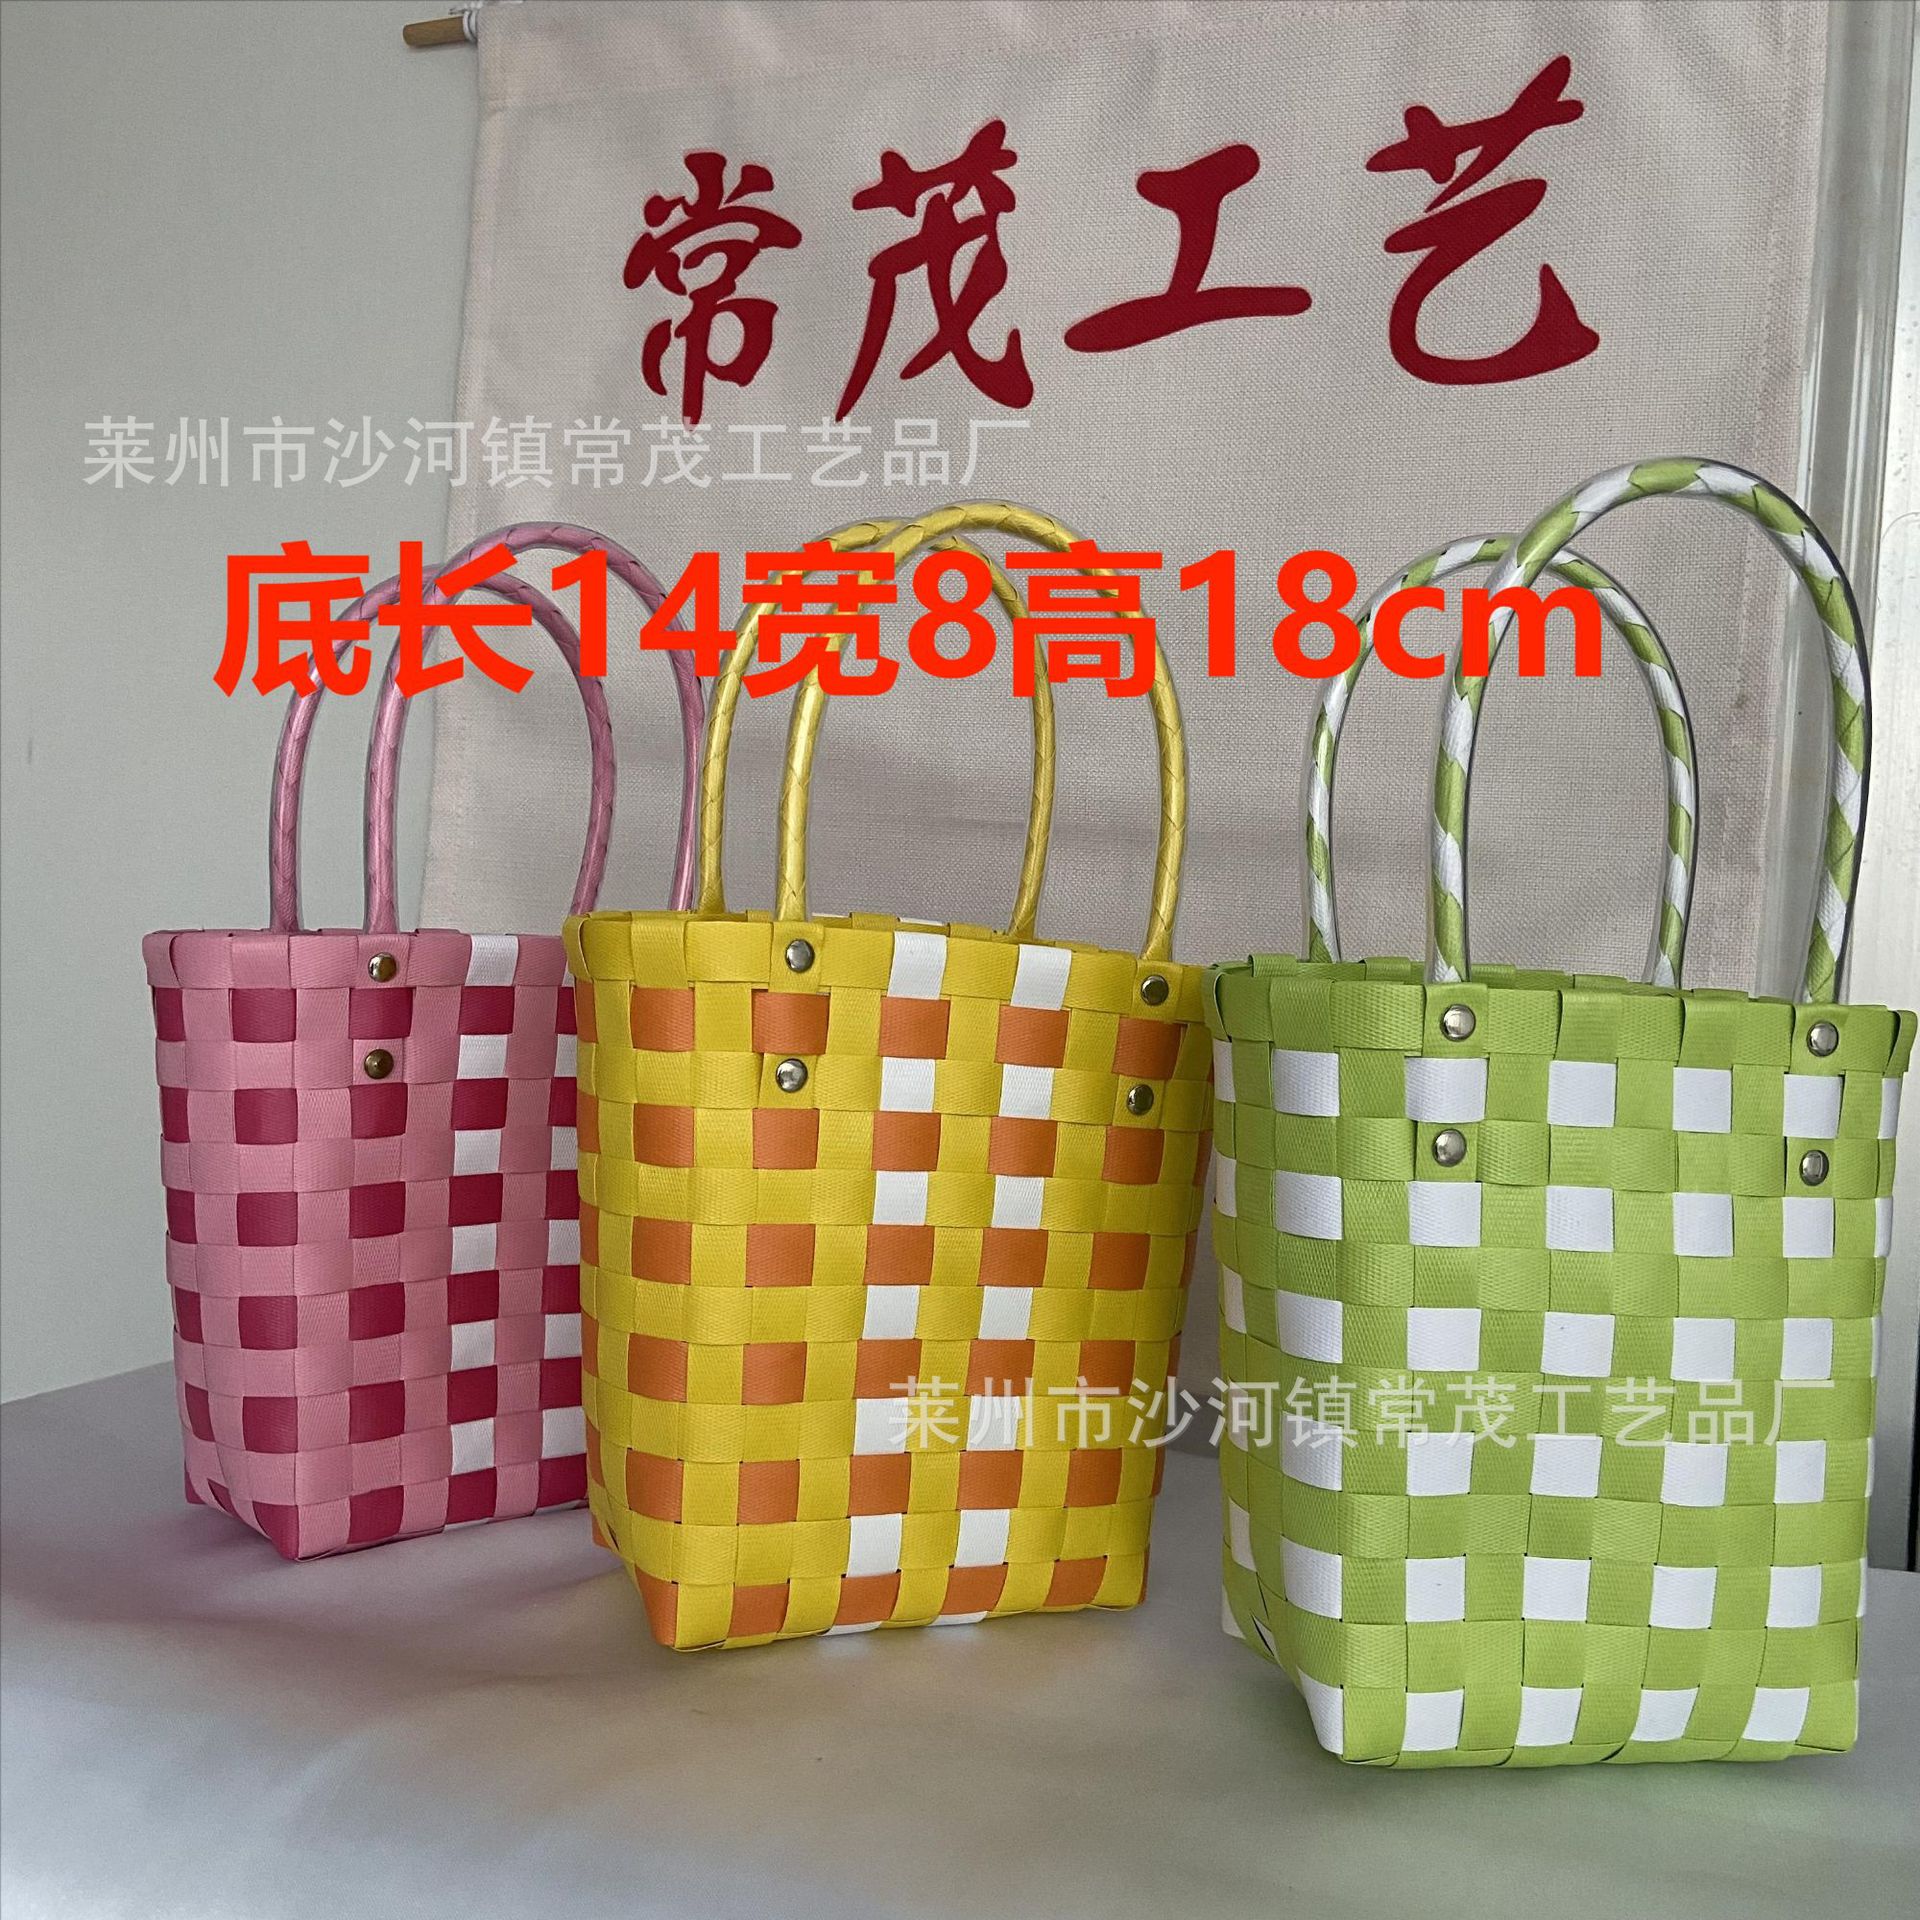 New Korean Style Literary Women's Bags Hand-Woven Bag Handbag Small Rectangular Handbag Shopping Basket Woven Bag